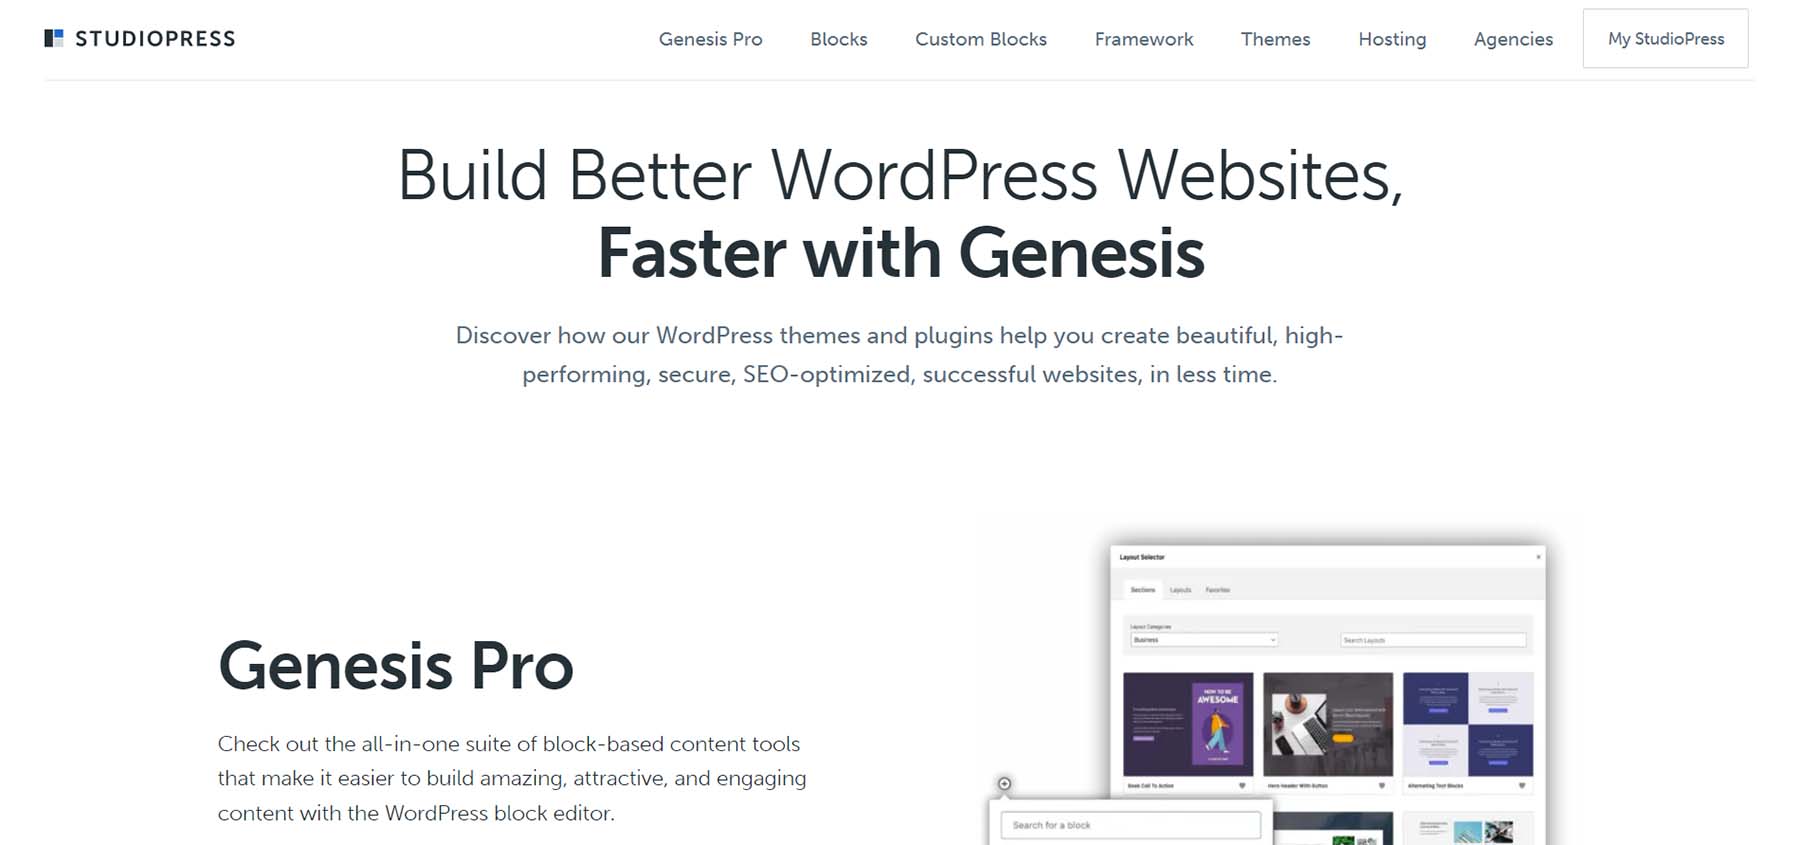 StudioPress and Genesis Pro